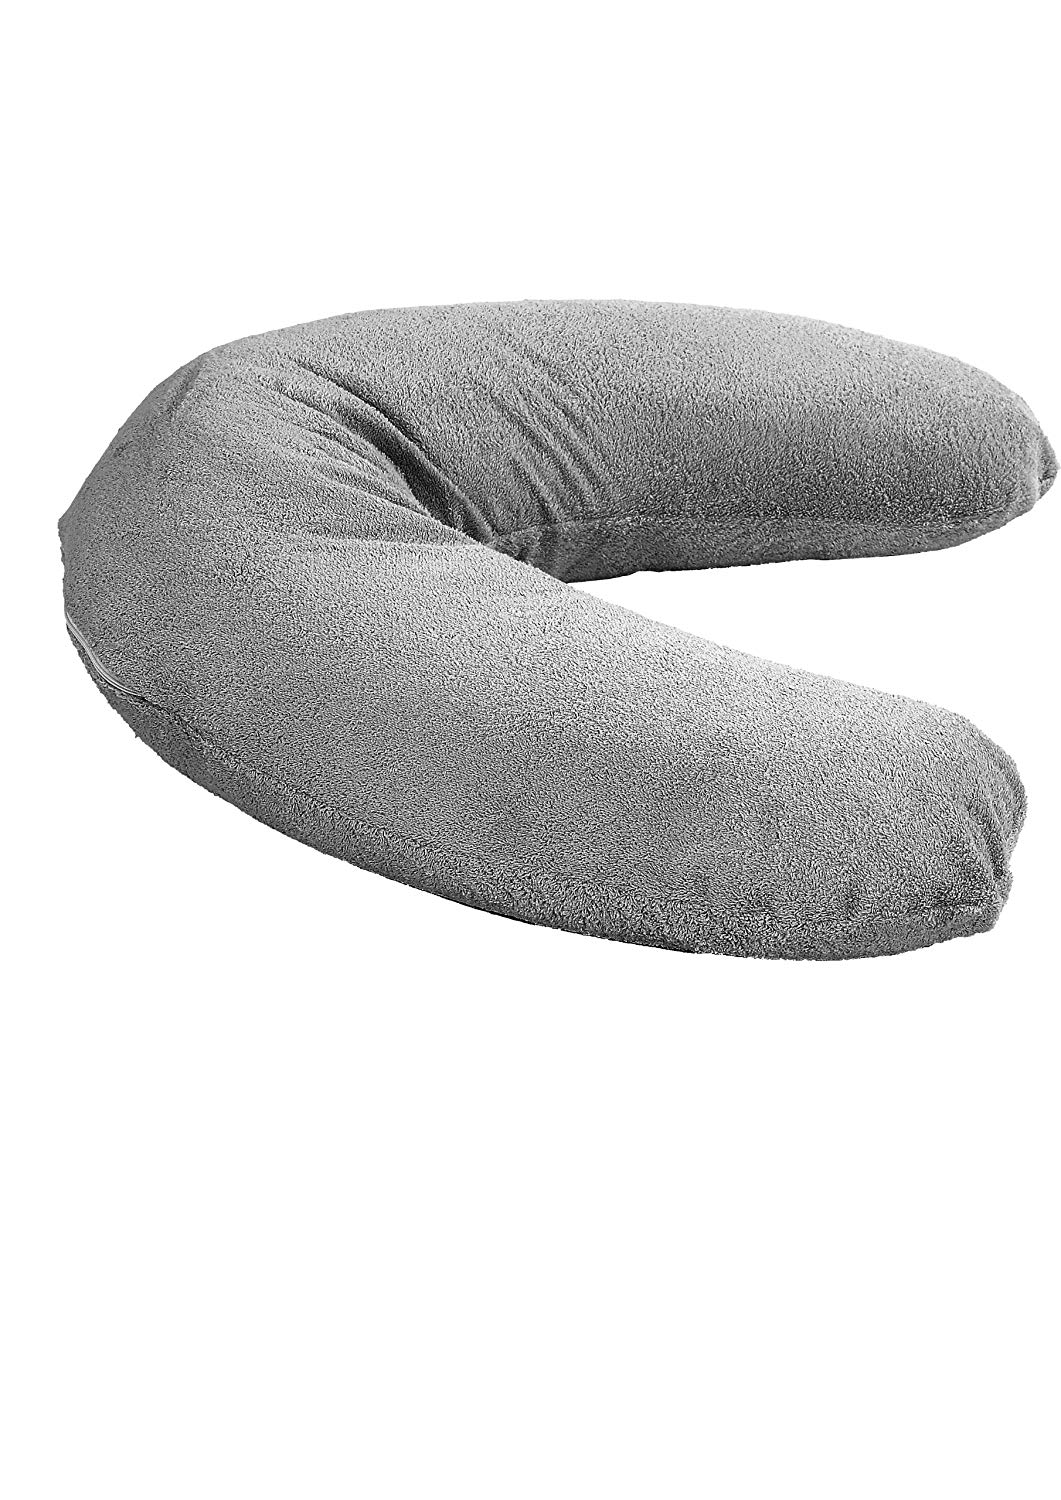 Bambisol Multifunctional Cushion, Grey